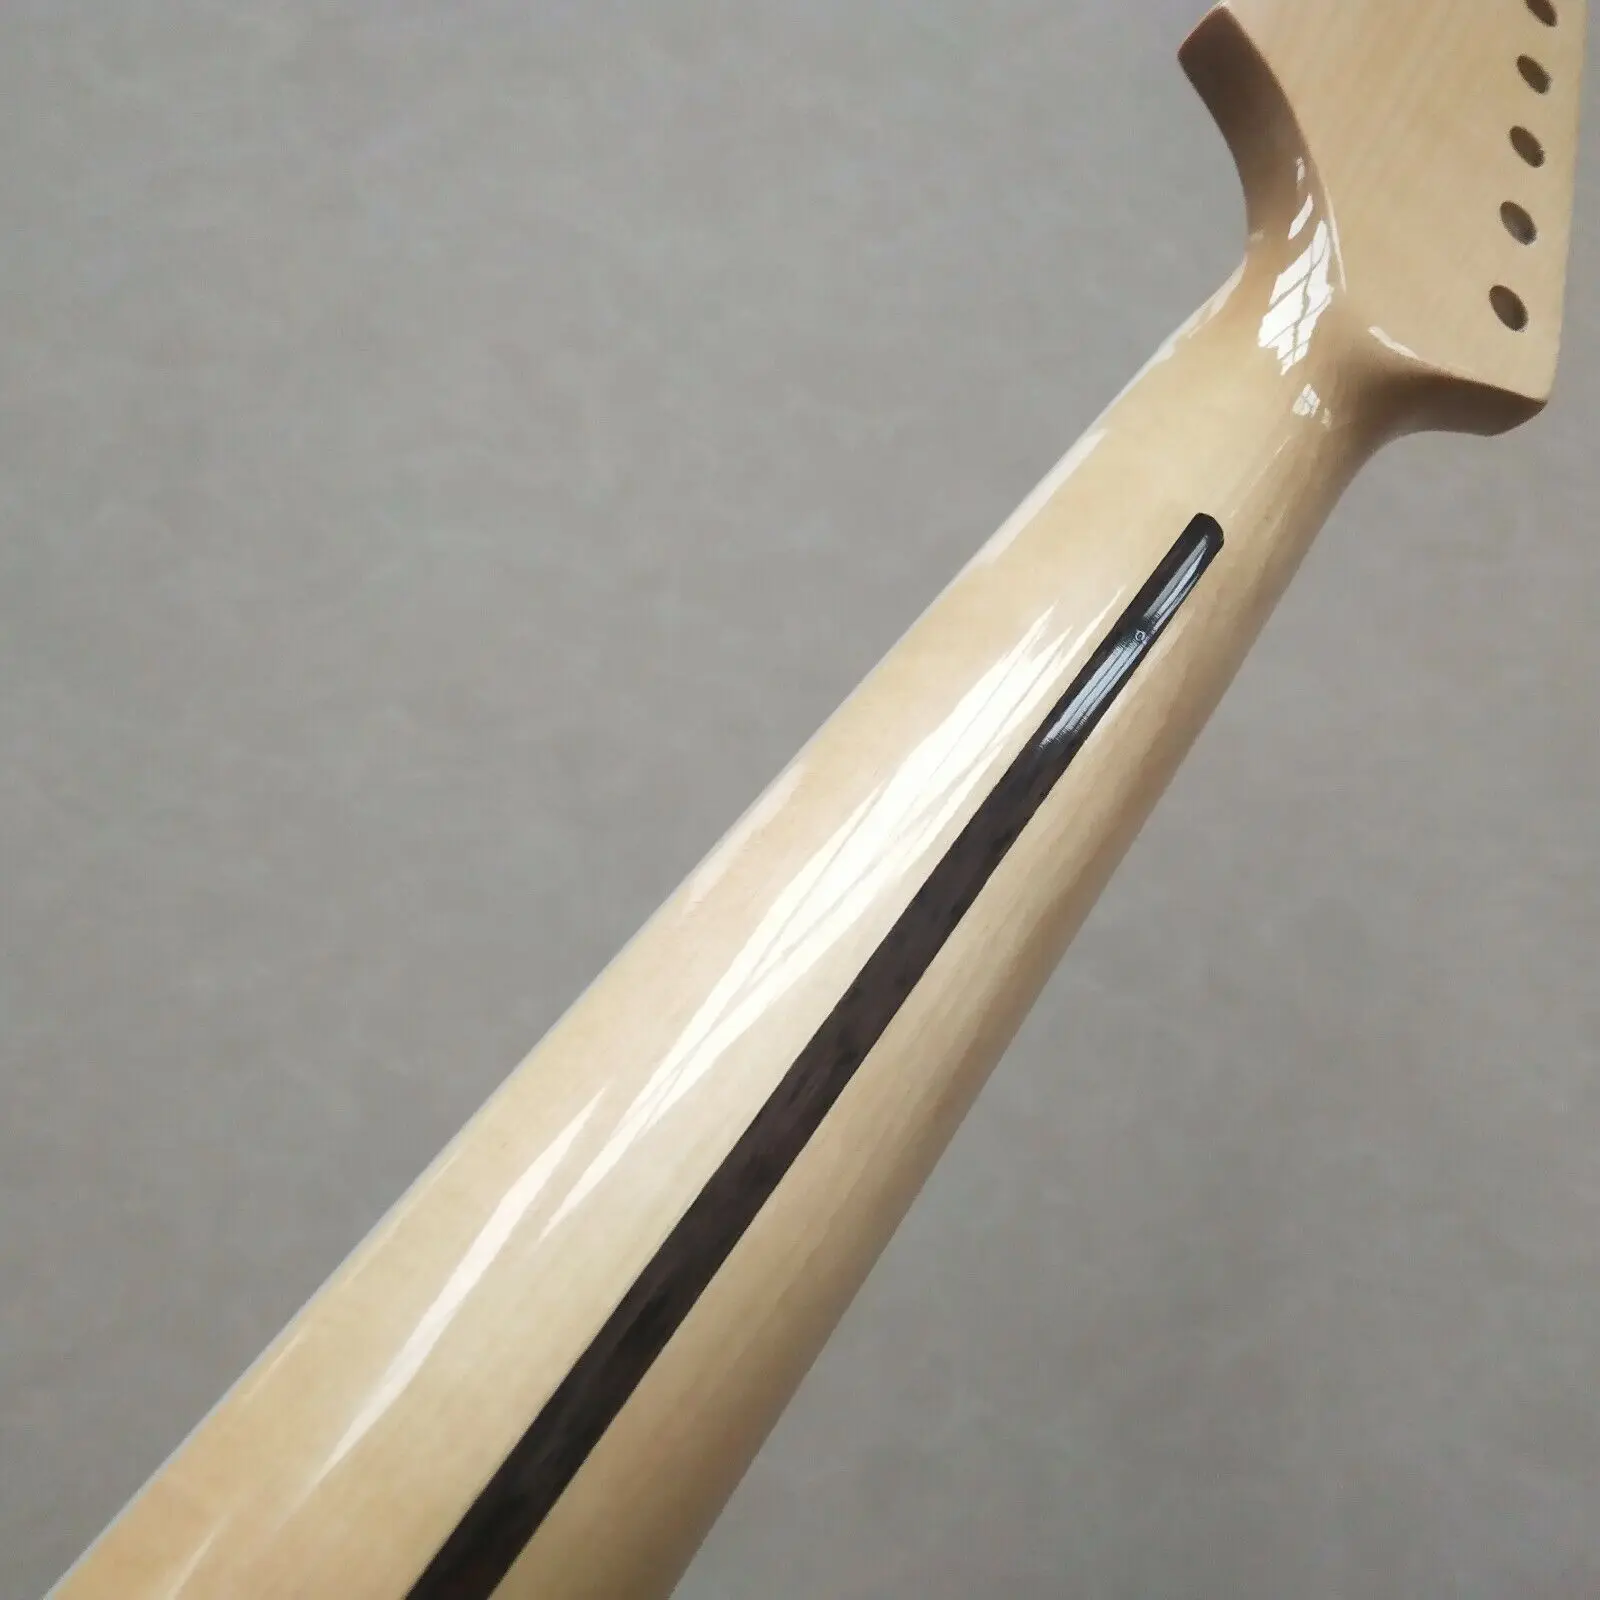 24inch Big head Maple Guitar neck 22fret Maple Fretboard Block Inlay Gloss parts enlarge